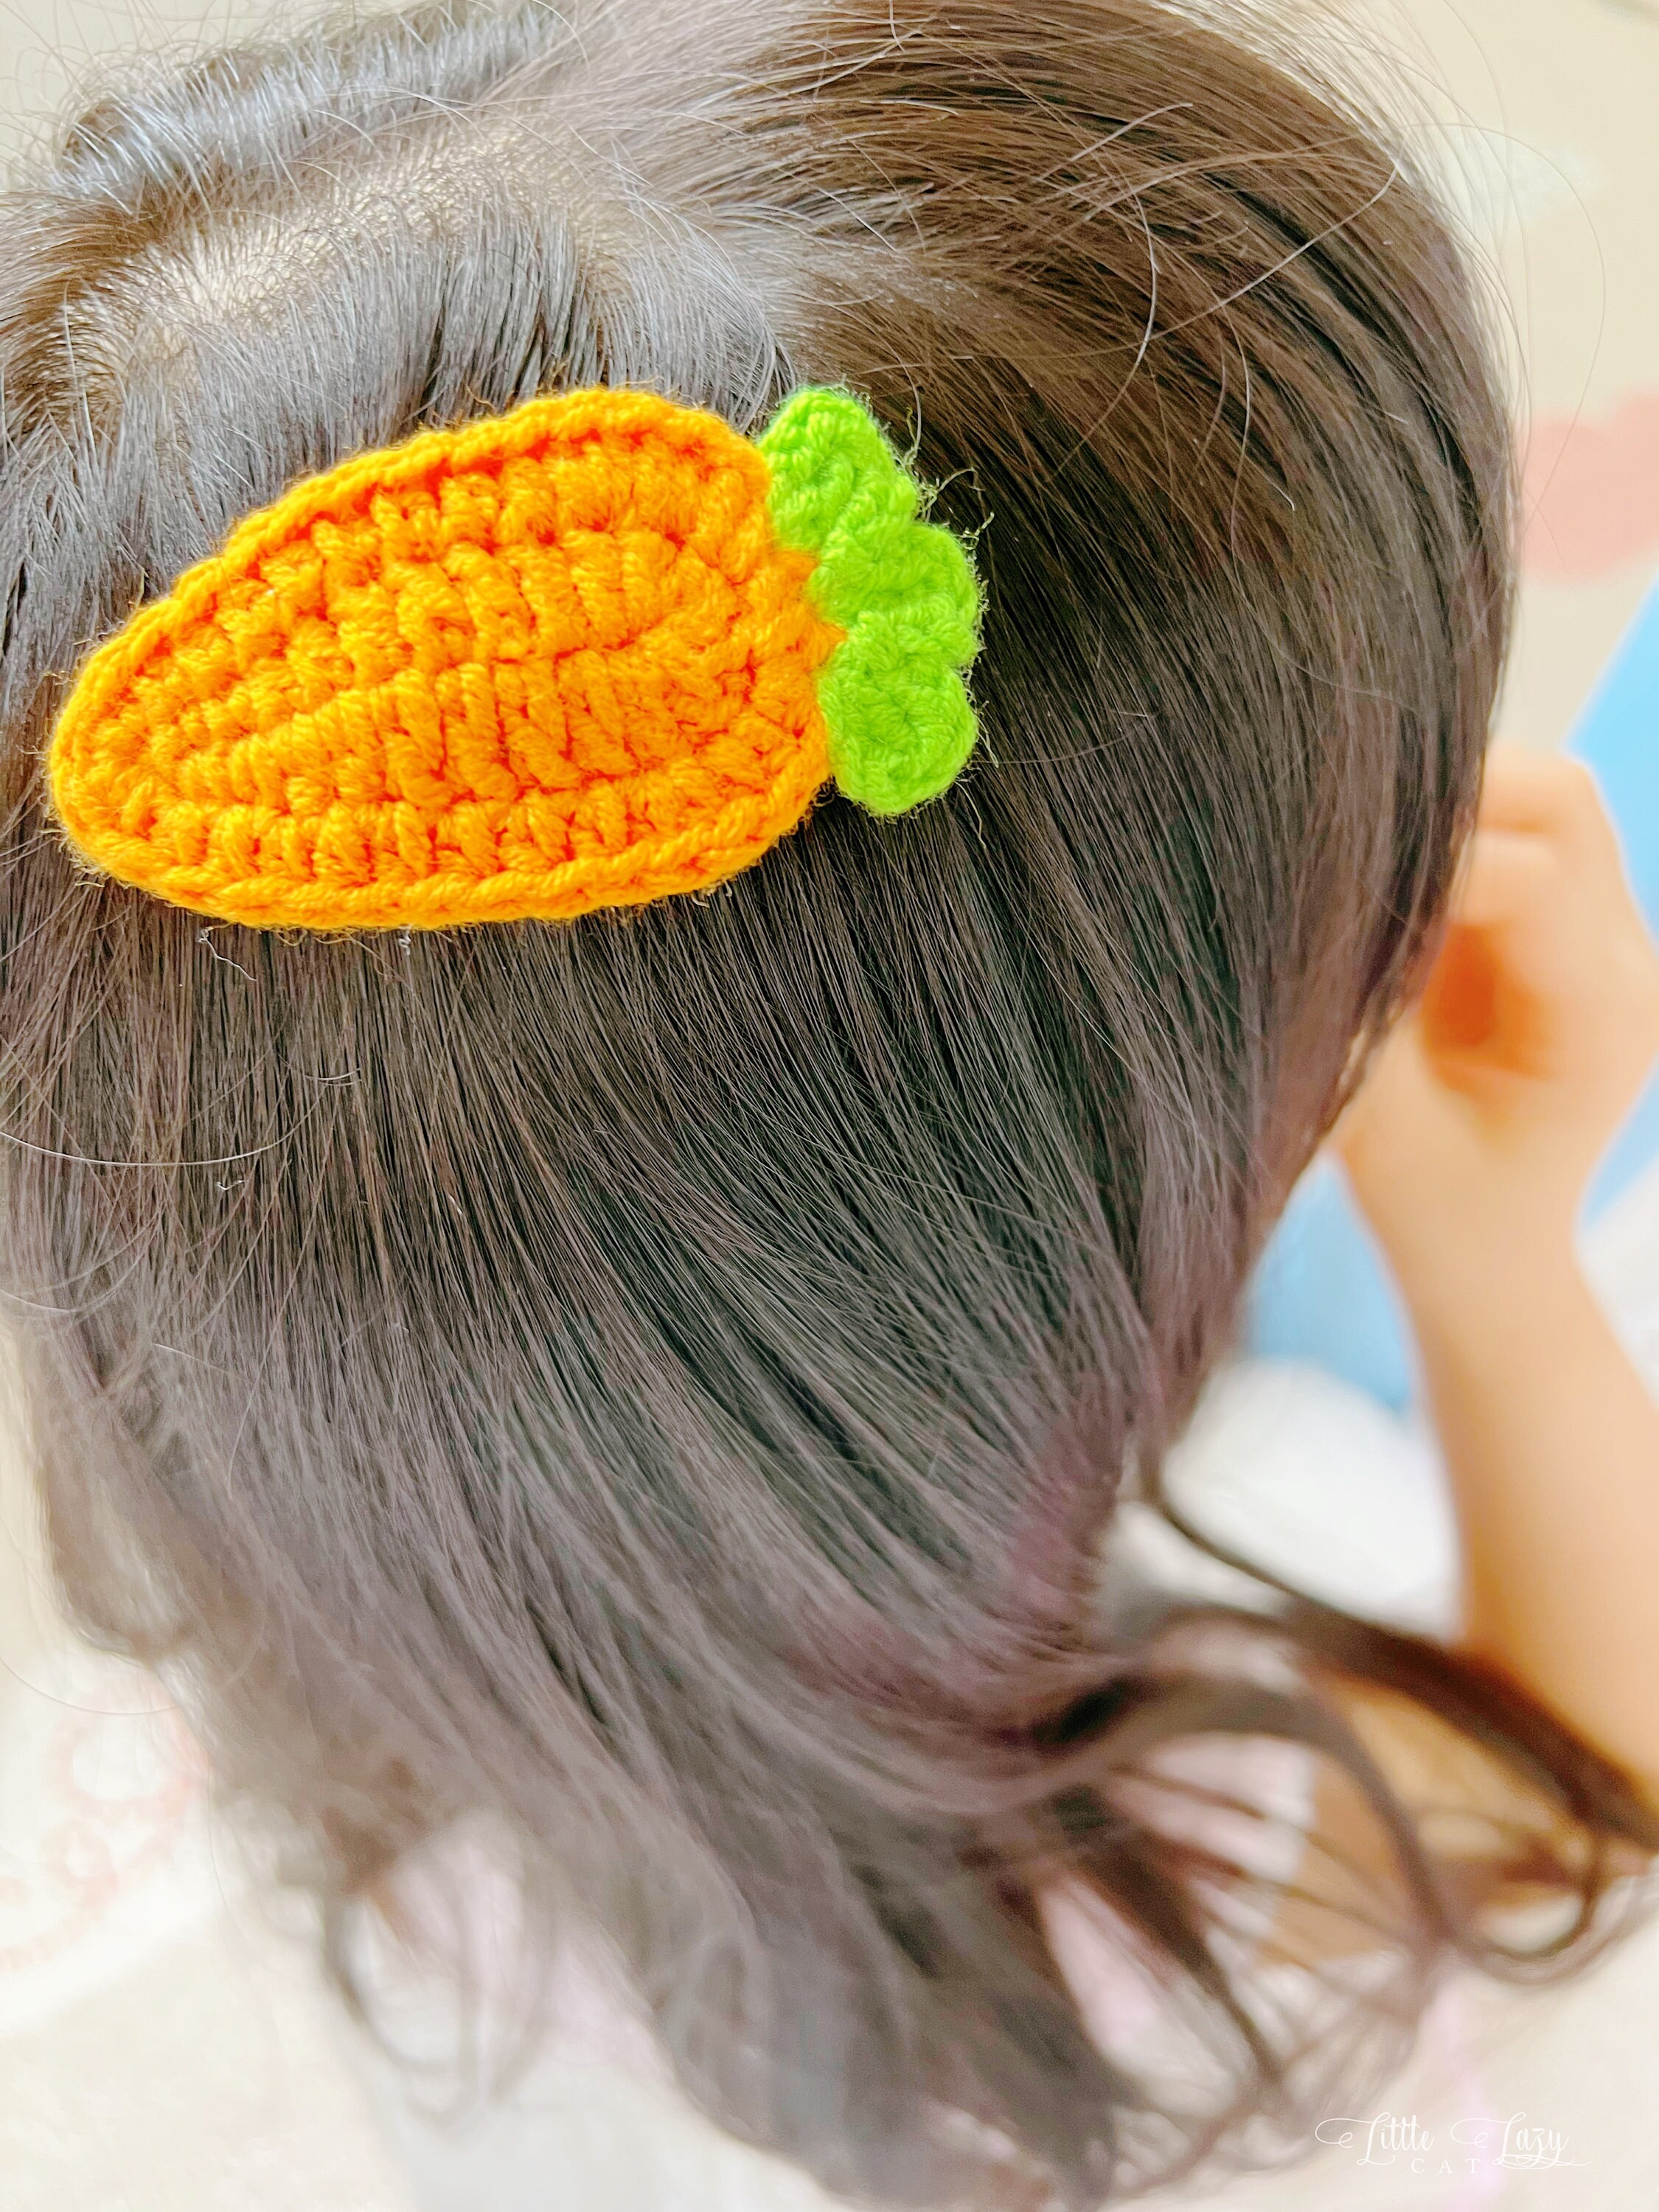 Crochet Carrot Hair Clips, Crochet Bunny Hair Clips, Carrot Hair Clips,  Carrot Hair Pins, Girl Toddler Kids Baby Hair Clips Hair Accessories 